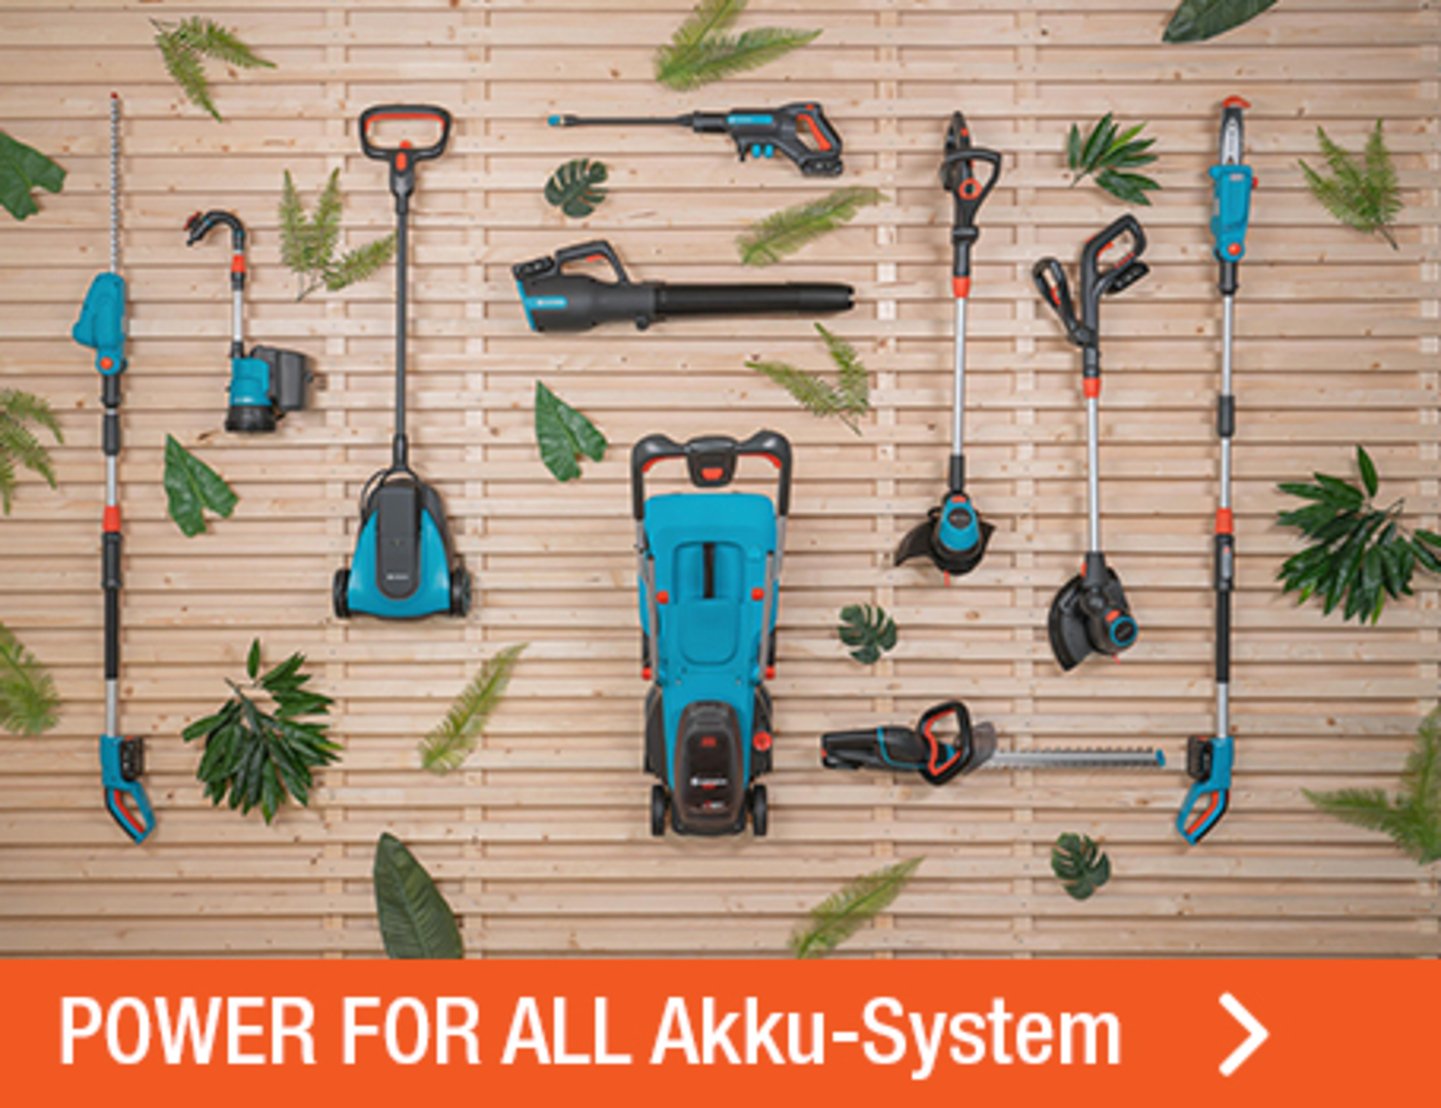 POWER FOR ALL Akku-System